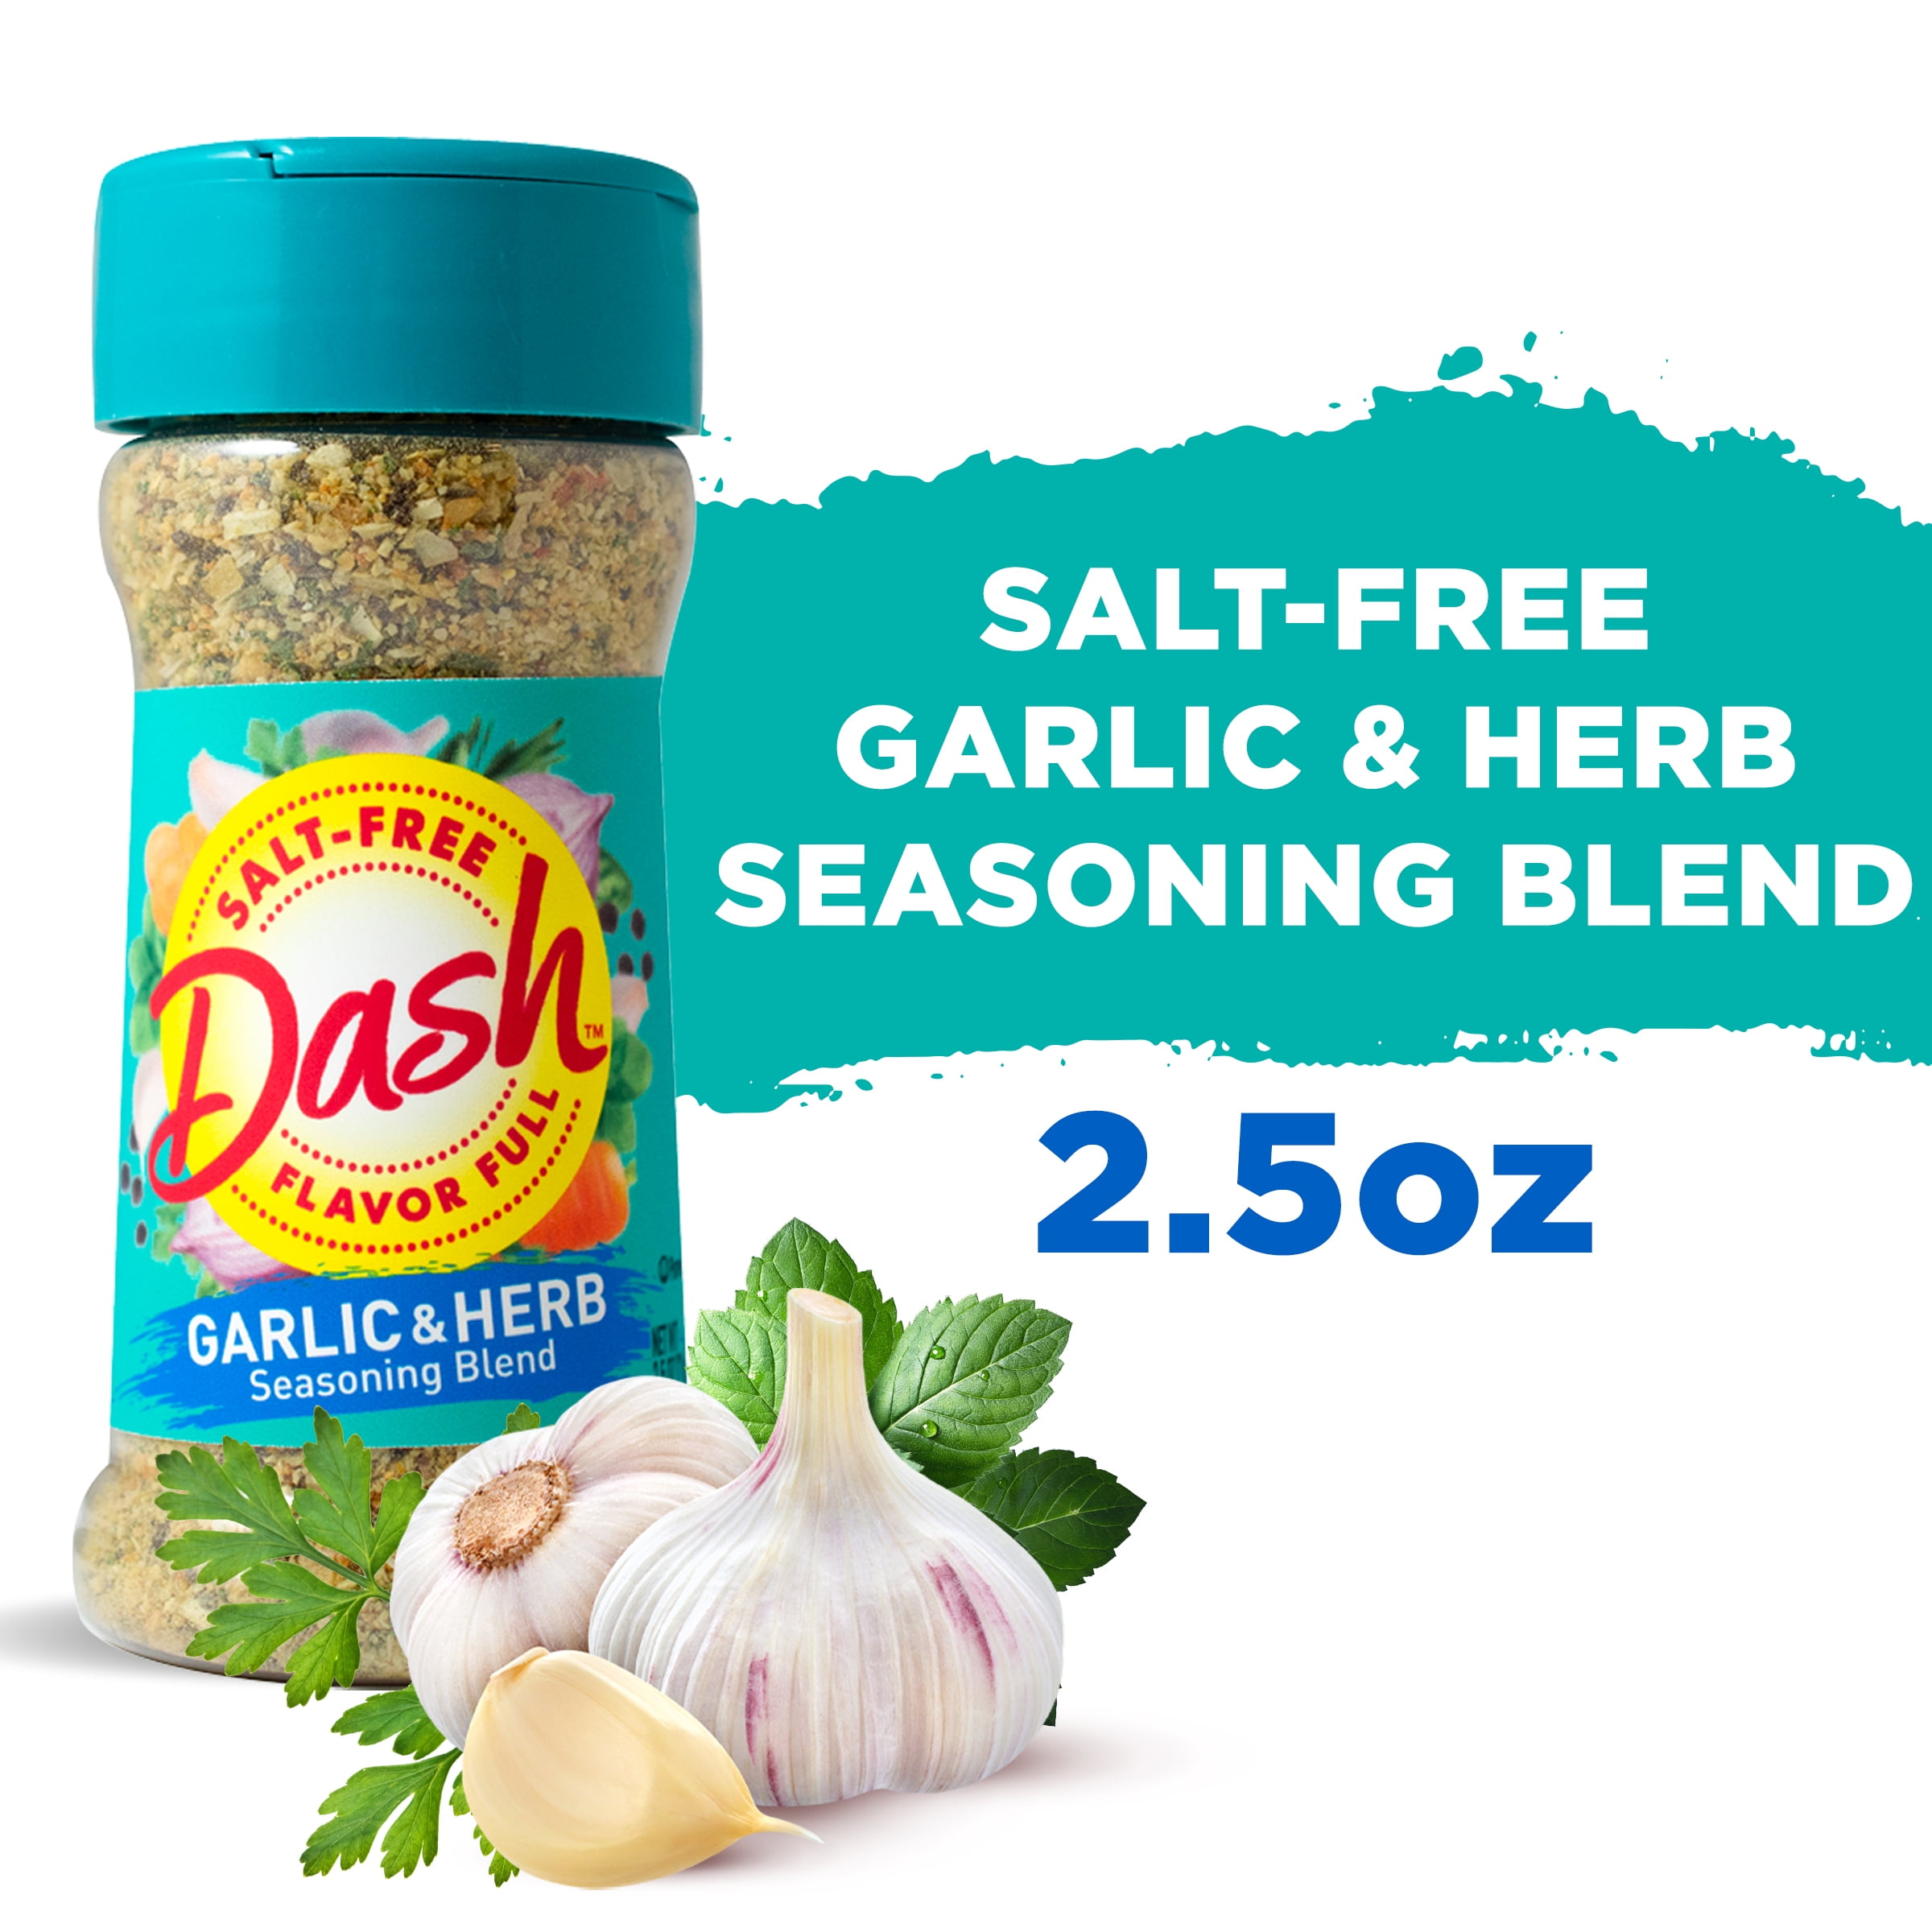 Mrs Dash Salt Free Blend Shakers 2.5 oz - Spicy Jalapeno, 1 Pc